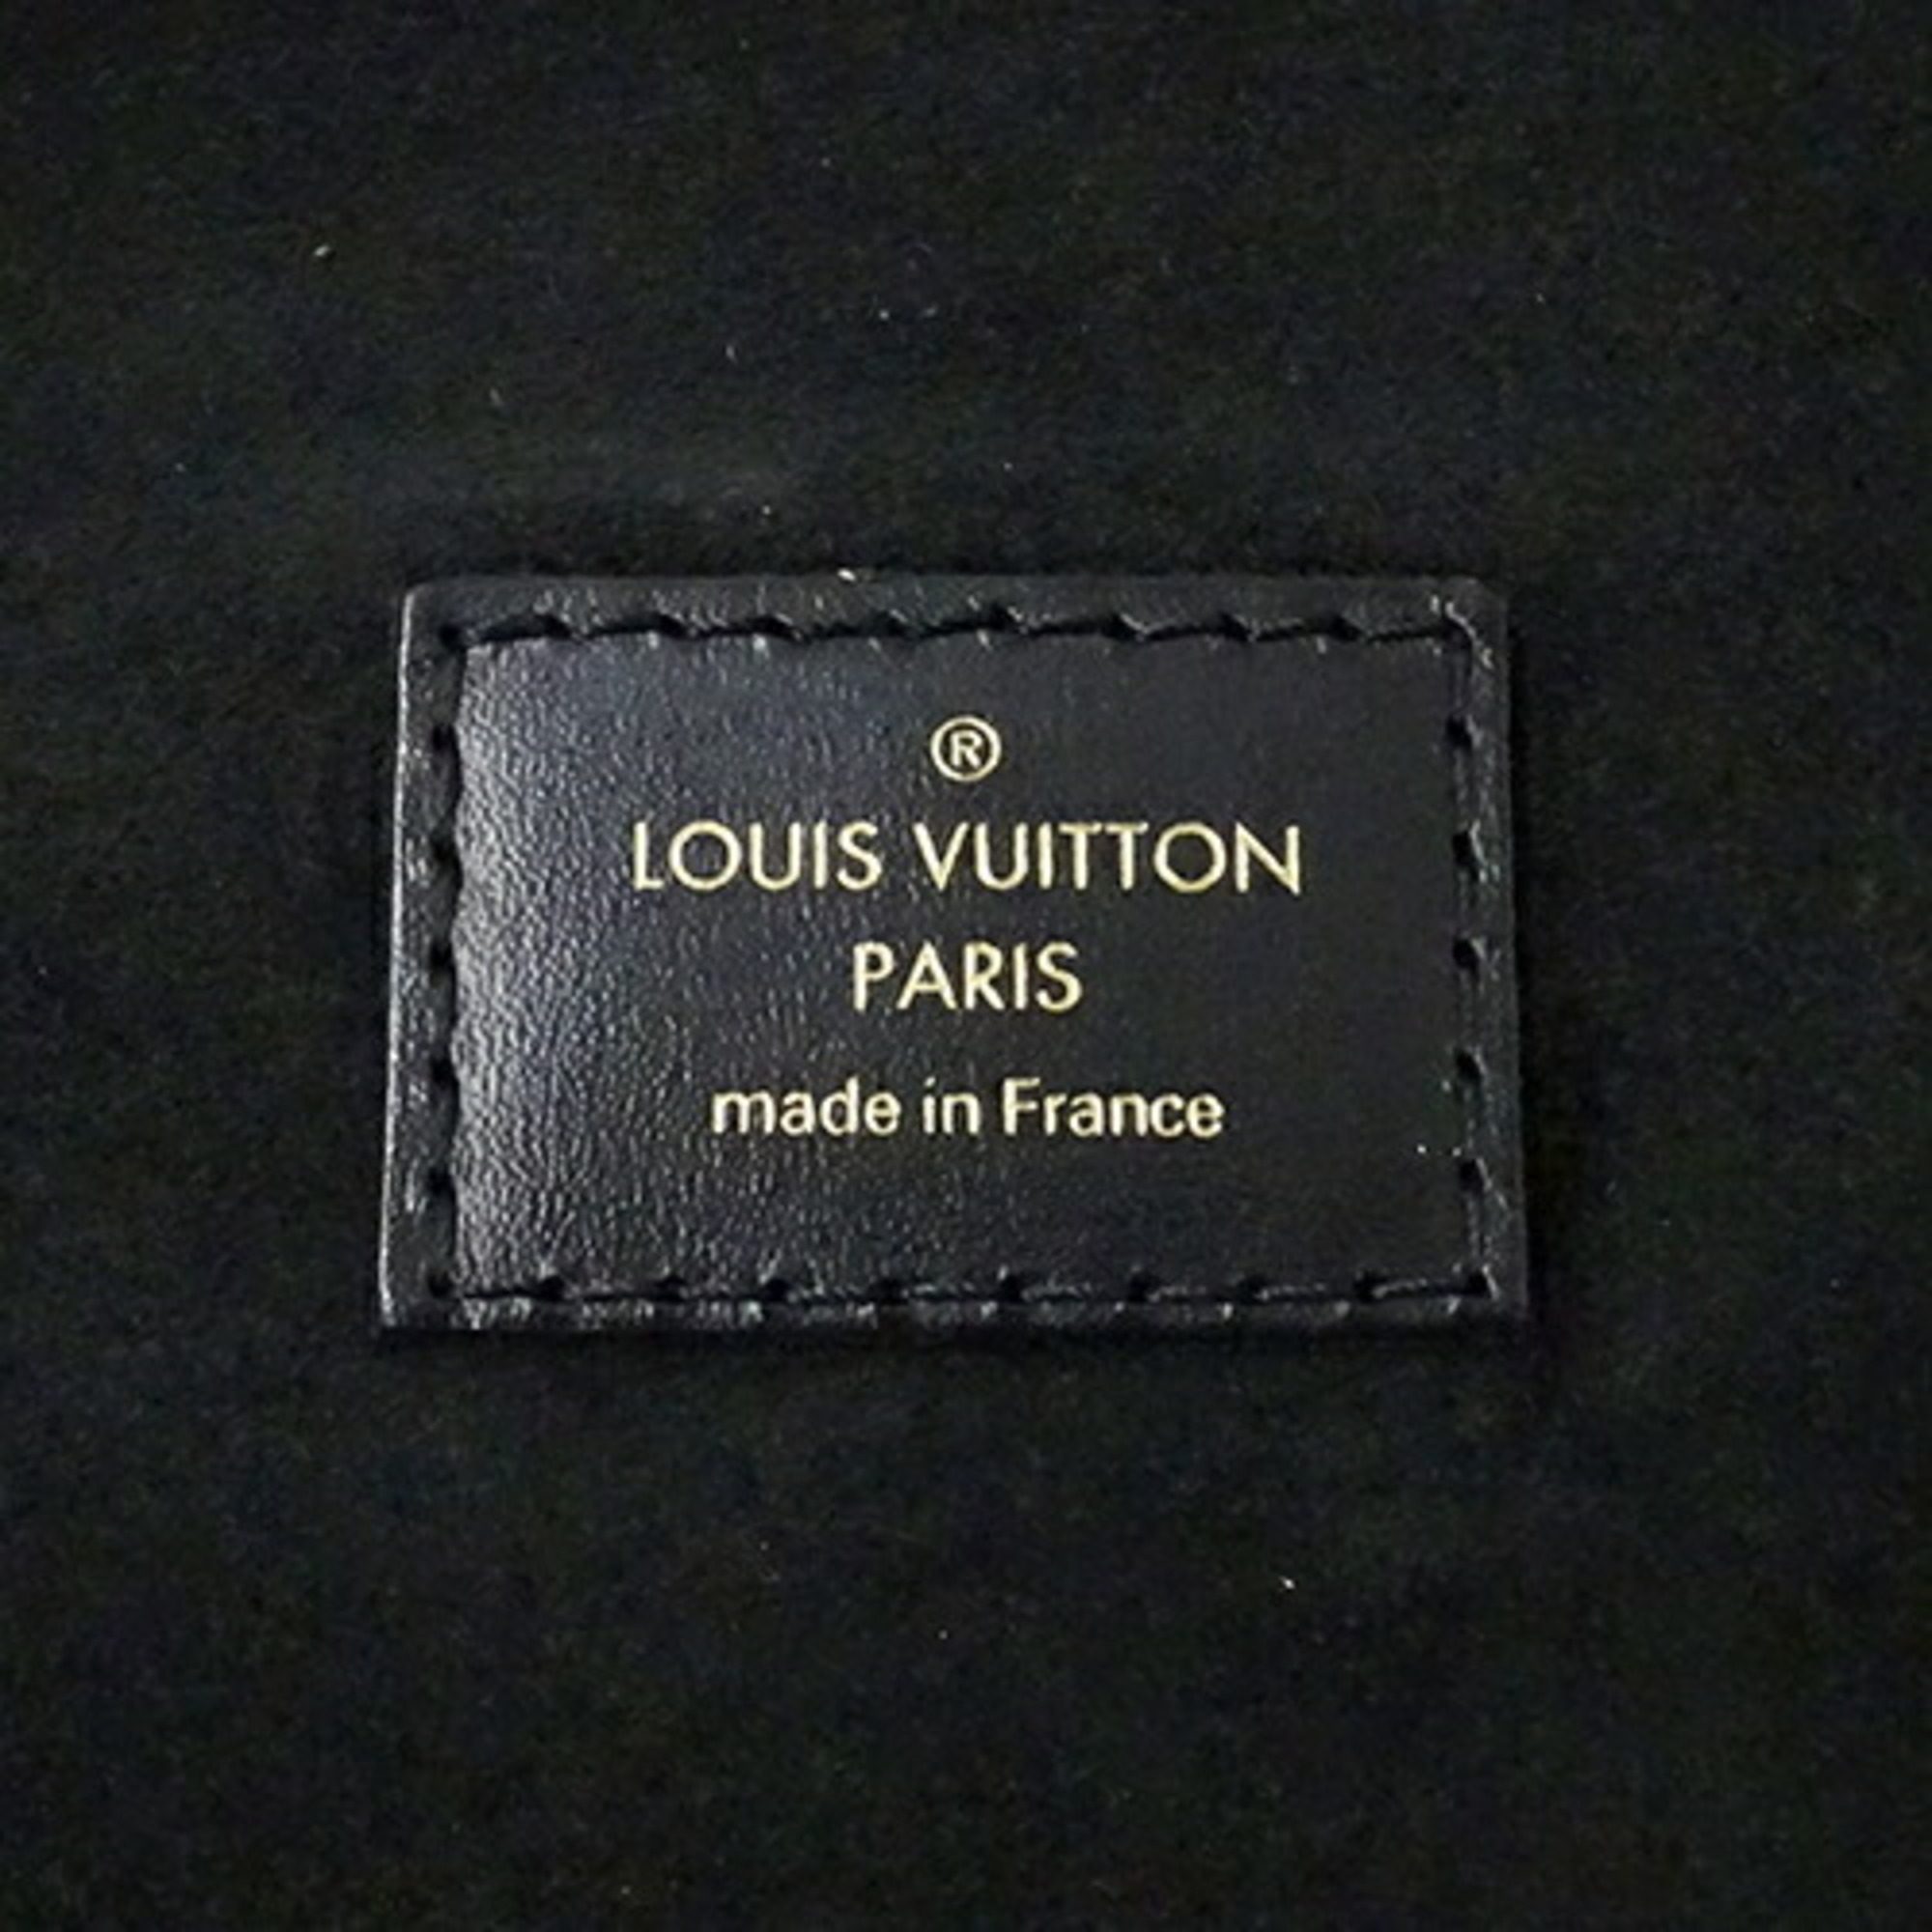 Louis Vuitton LOUIS VUITTON Bag Monogram Reverse Women's Handbag Shoulder 2way Vanity NV PM M45165 Brown Chain Compact